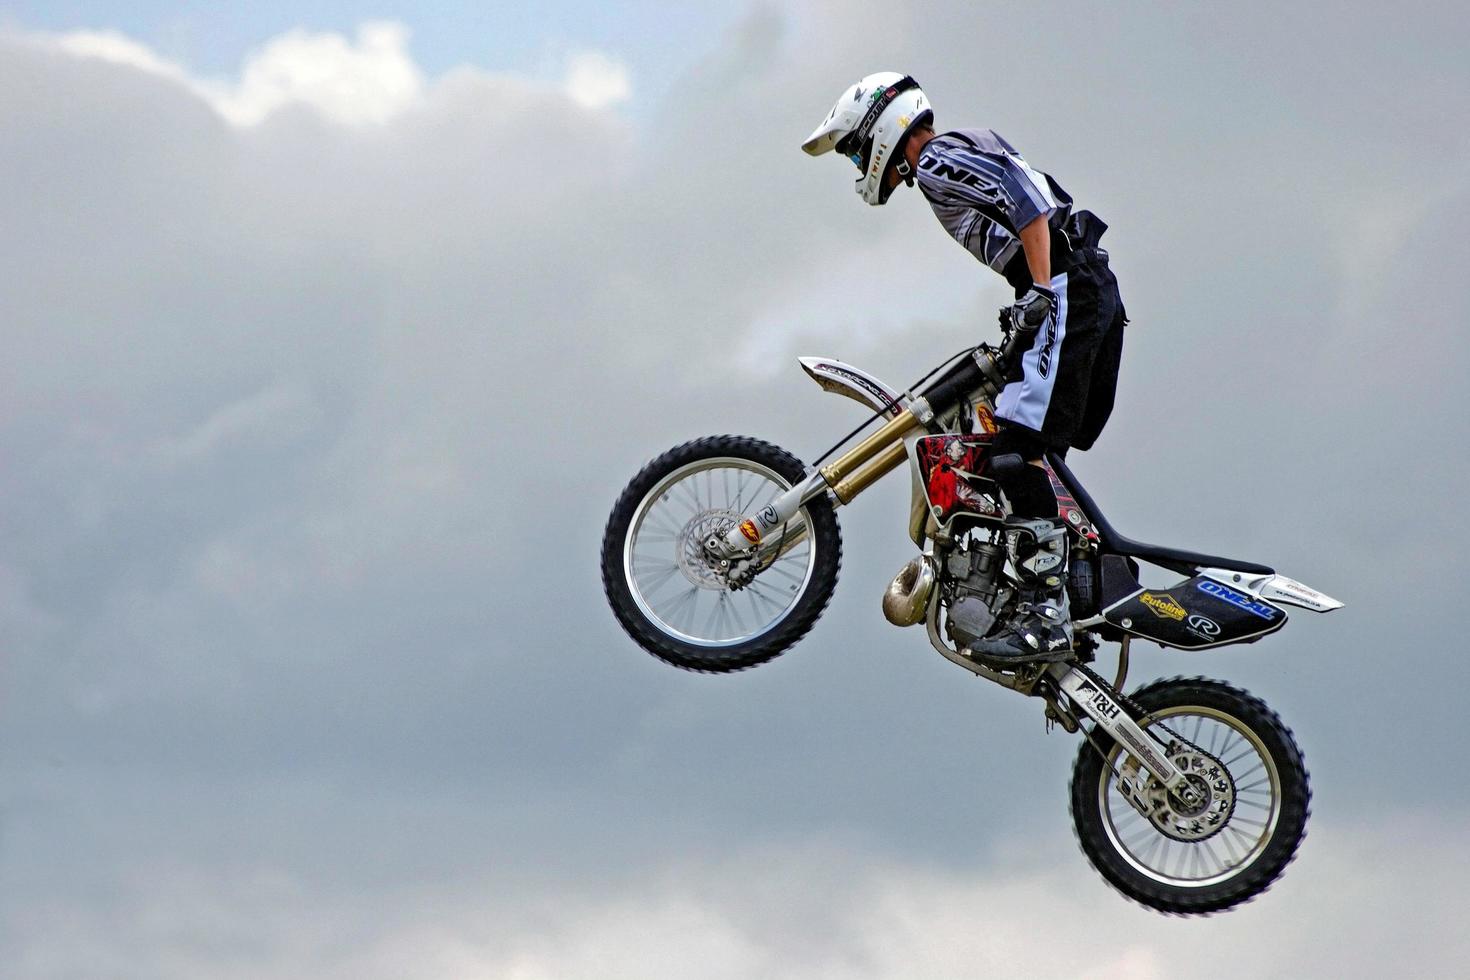 Paddock Wood, Kent, UK, 2005. Stunt Motorcyclist performing at the Hop Farm photo